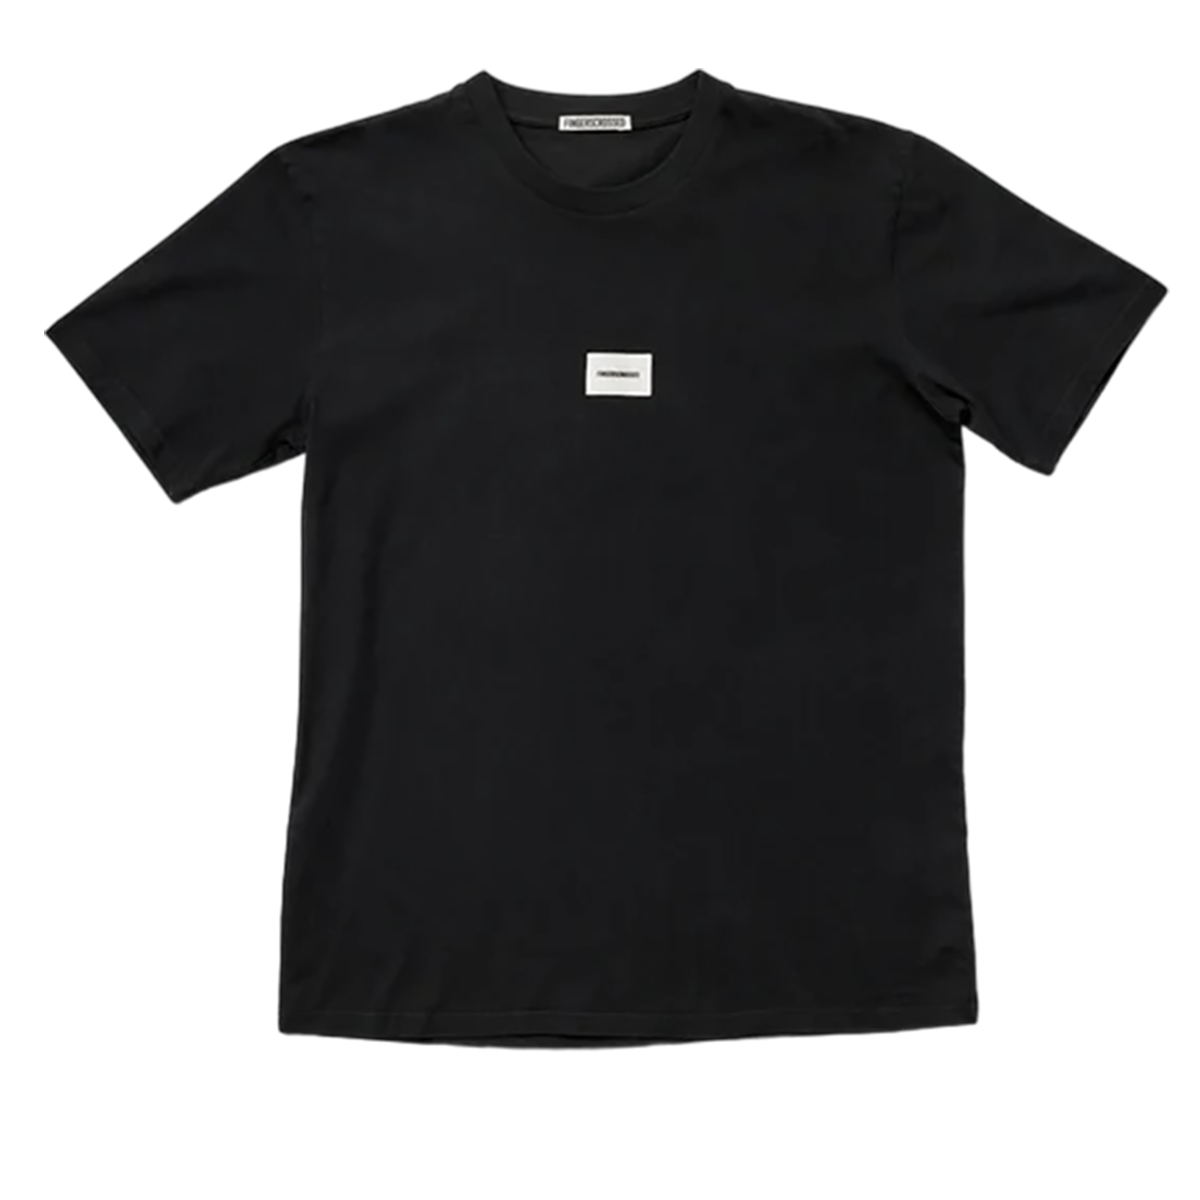 Movement Type T-Shirt - Black